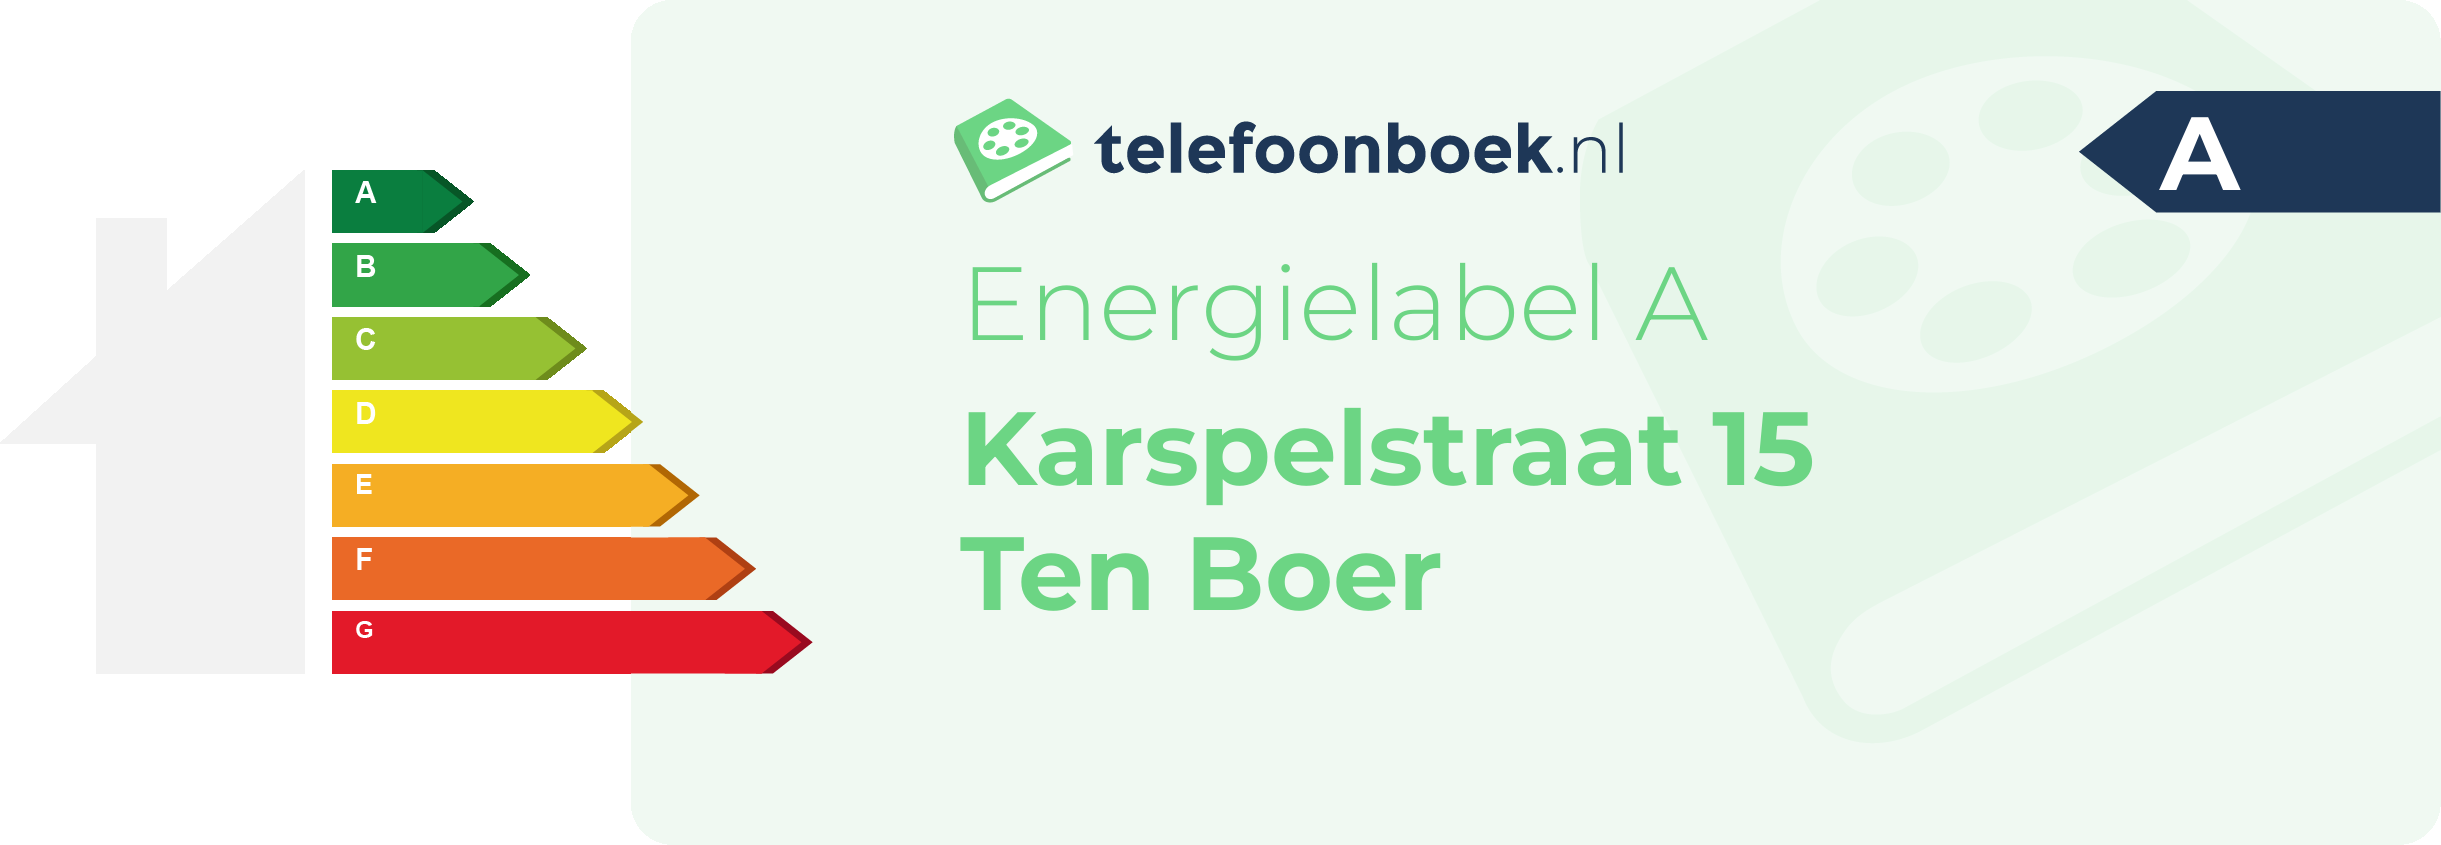 Energielabel Karspelstraat 15 Ten Boer